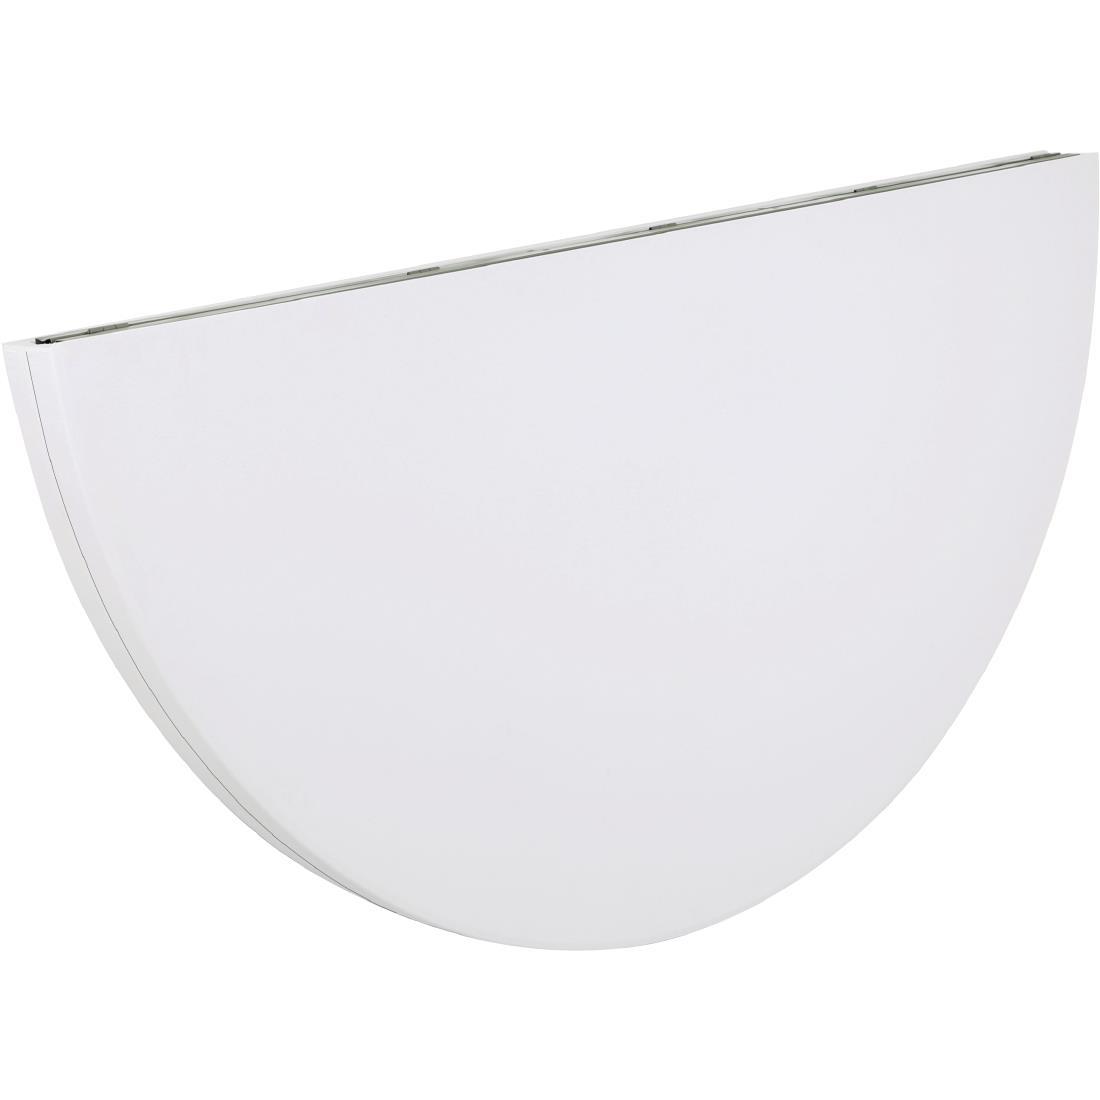 Bolero Round PE Centre Folding Table White 6ft (Single) - HC270  - 6